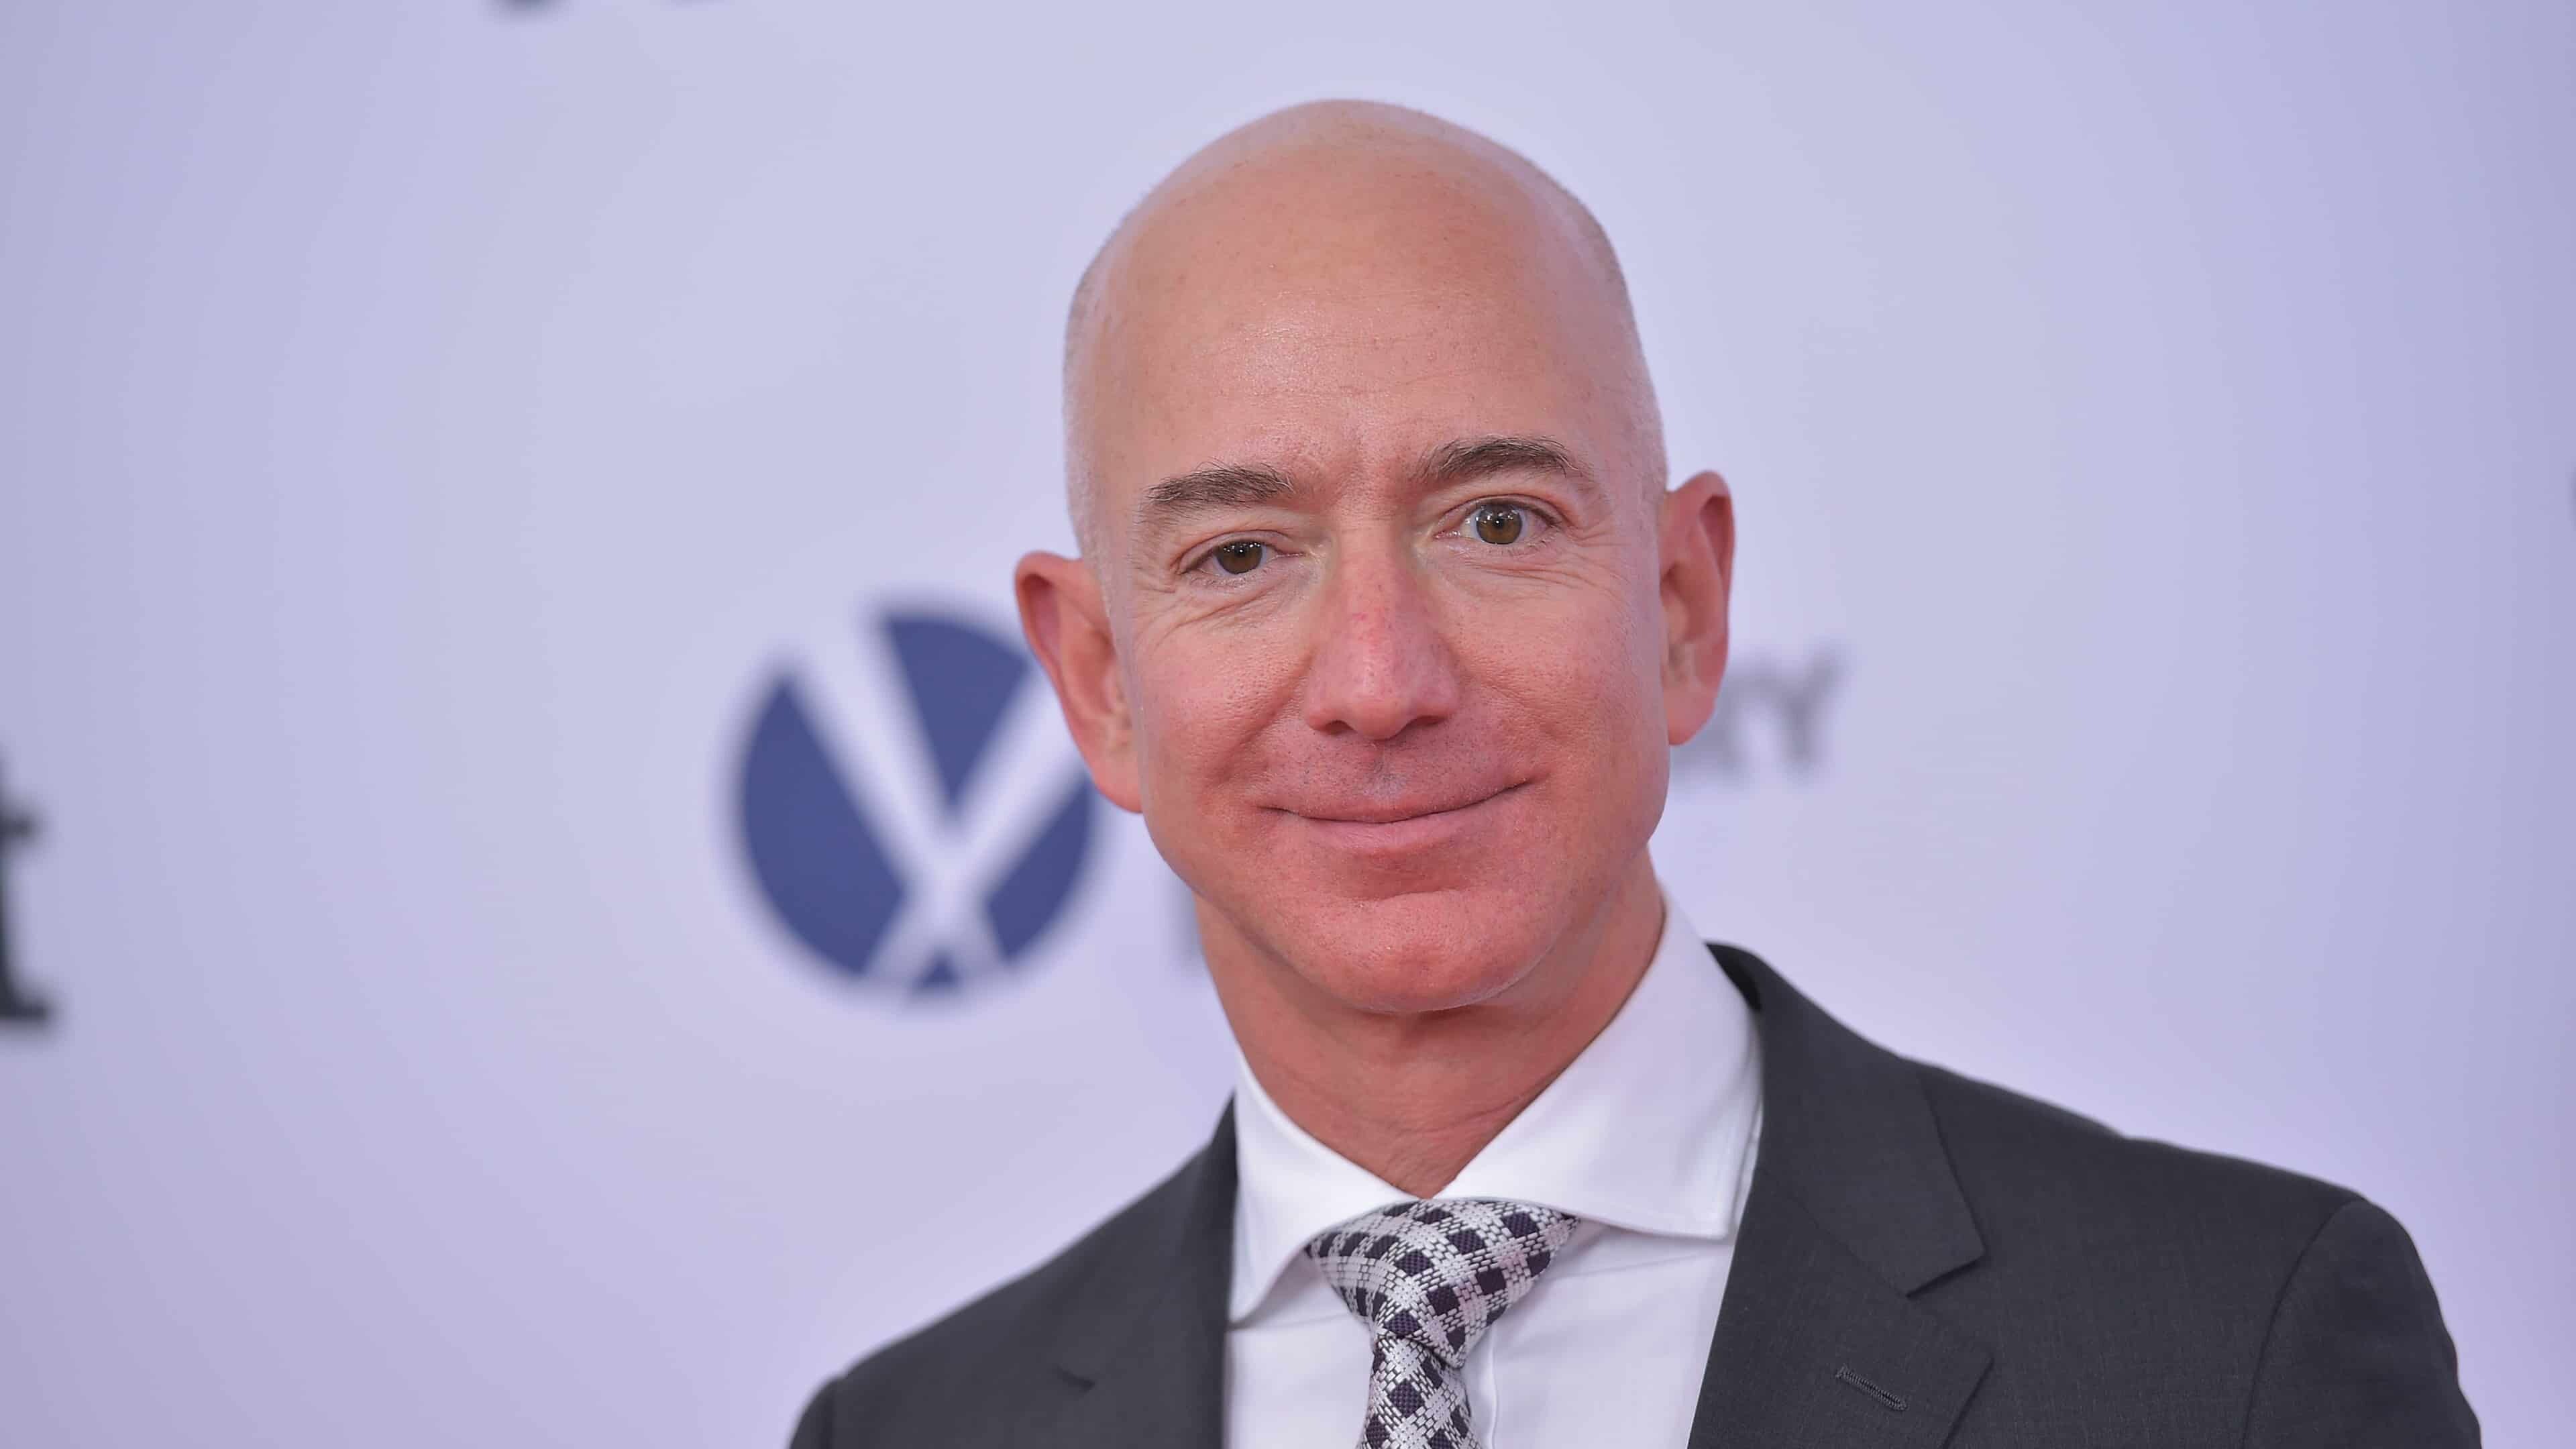 Jeff Bezos: An American entrepreneur, media proprietor, investor, and commercial astronaut. 3840x2160 4K Wallpaper.